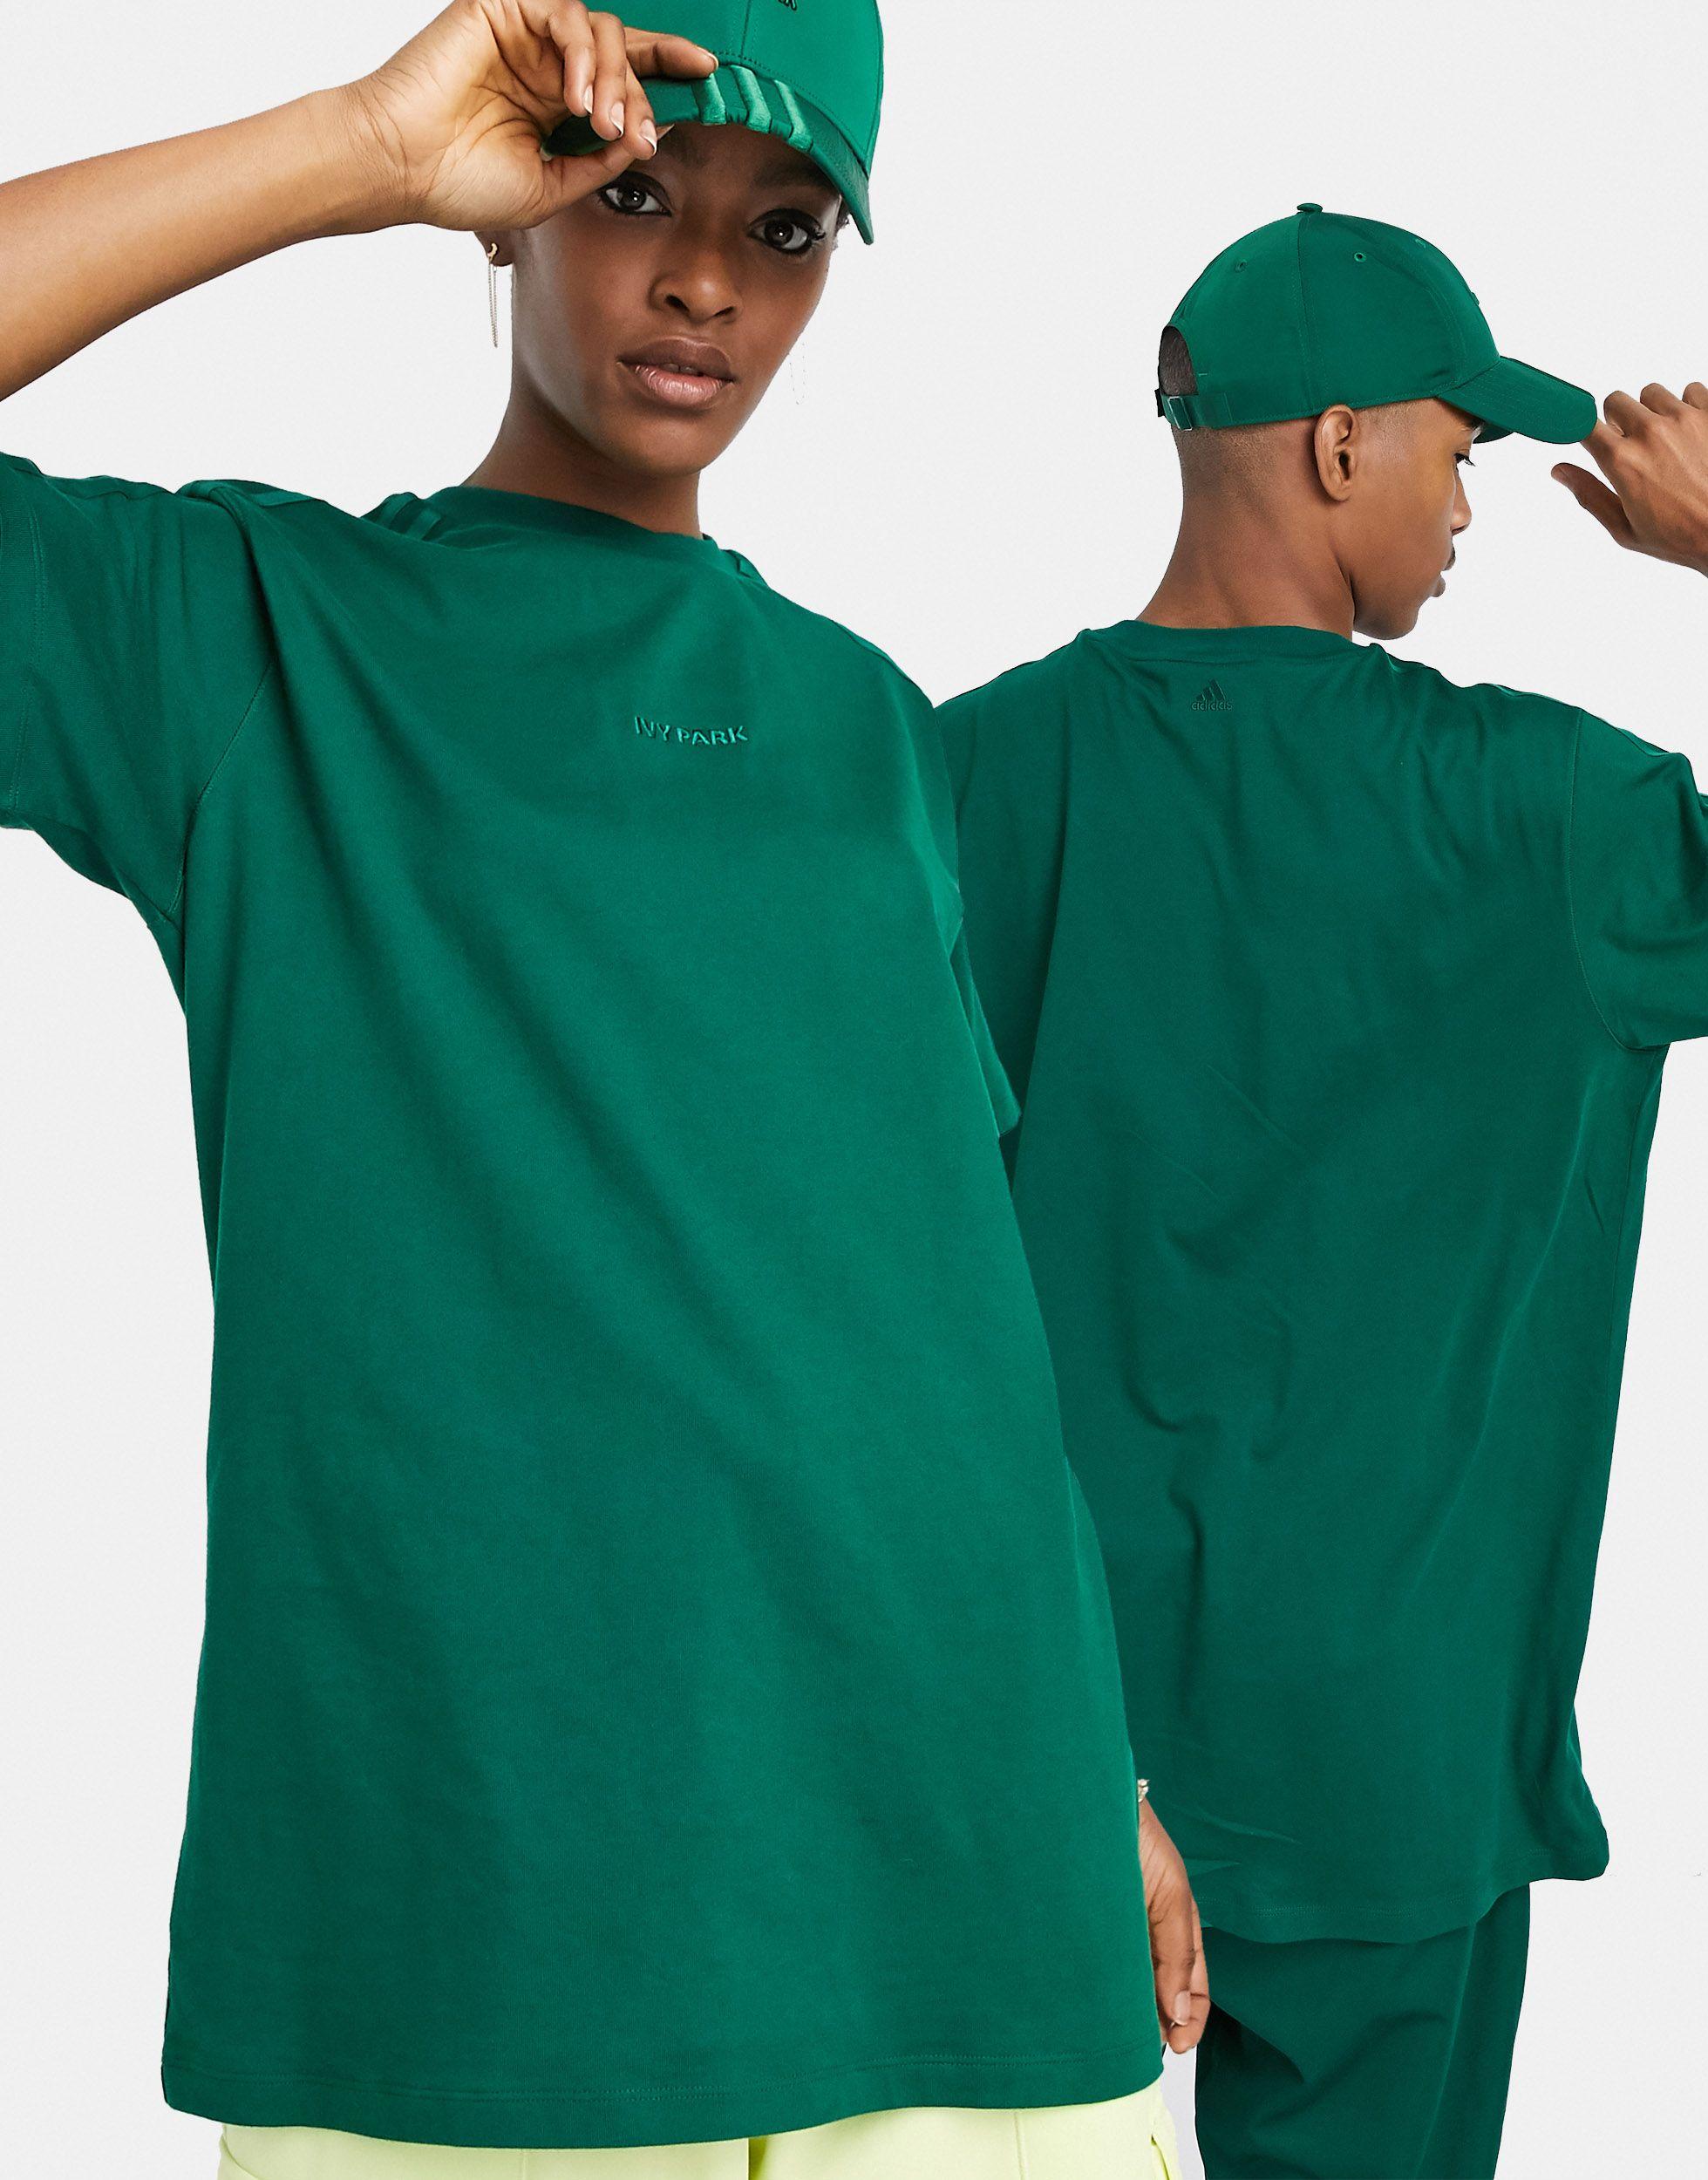 tone Håbefuld Afslut Ivy Park Adidas X T-shirt in Green | Lyst